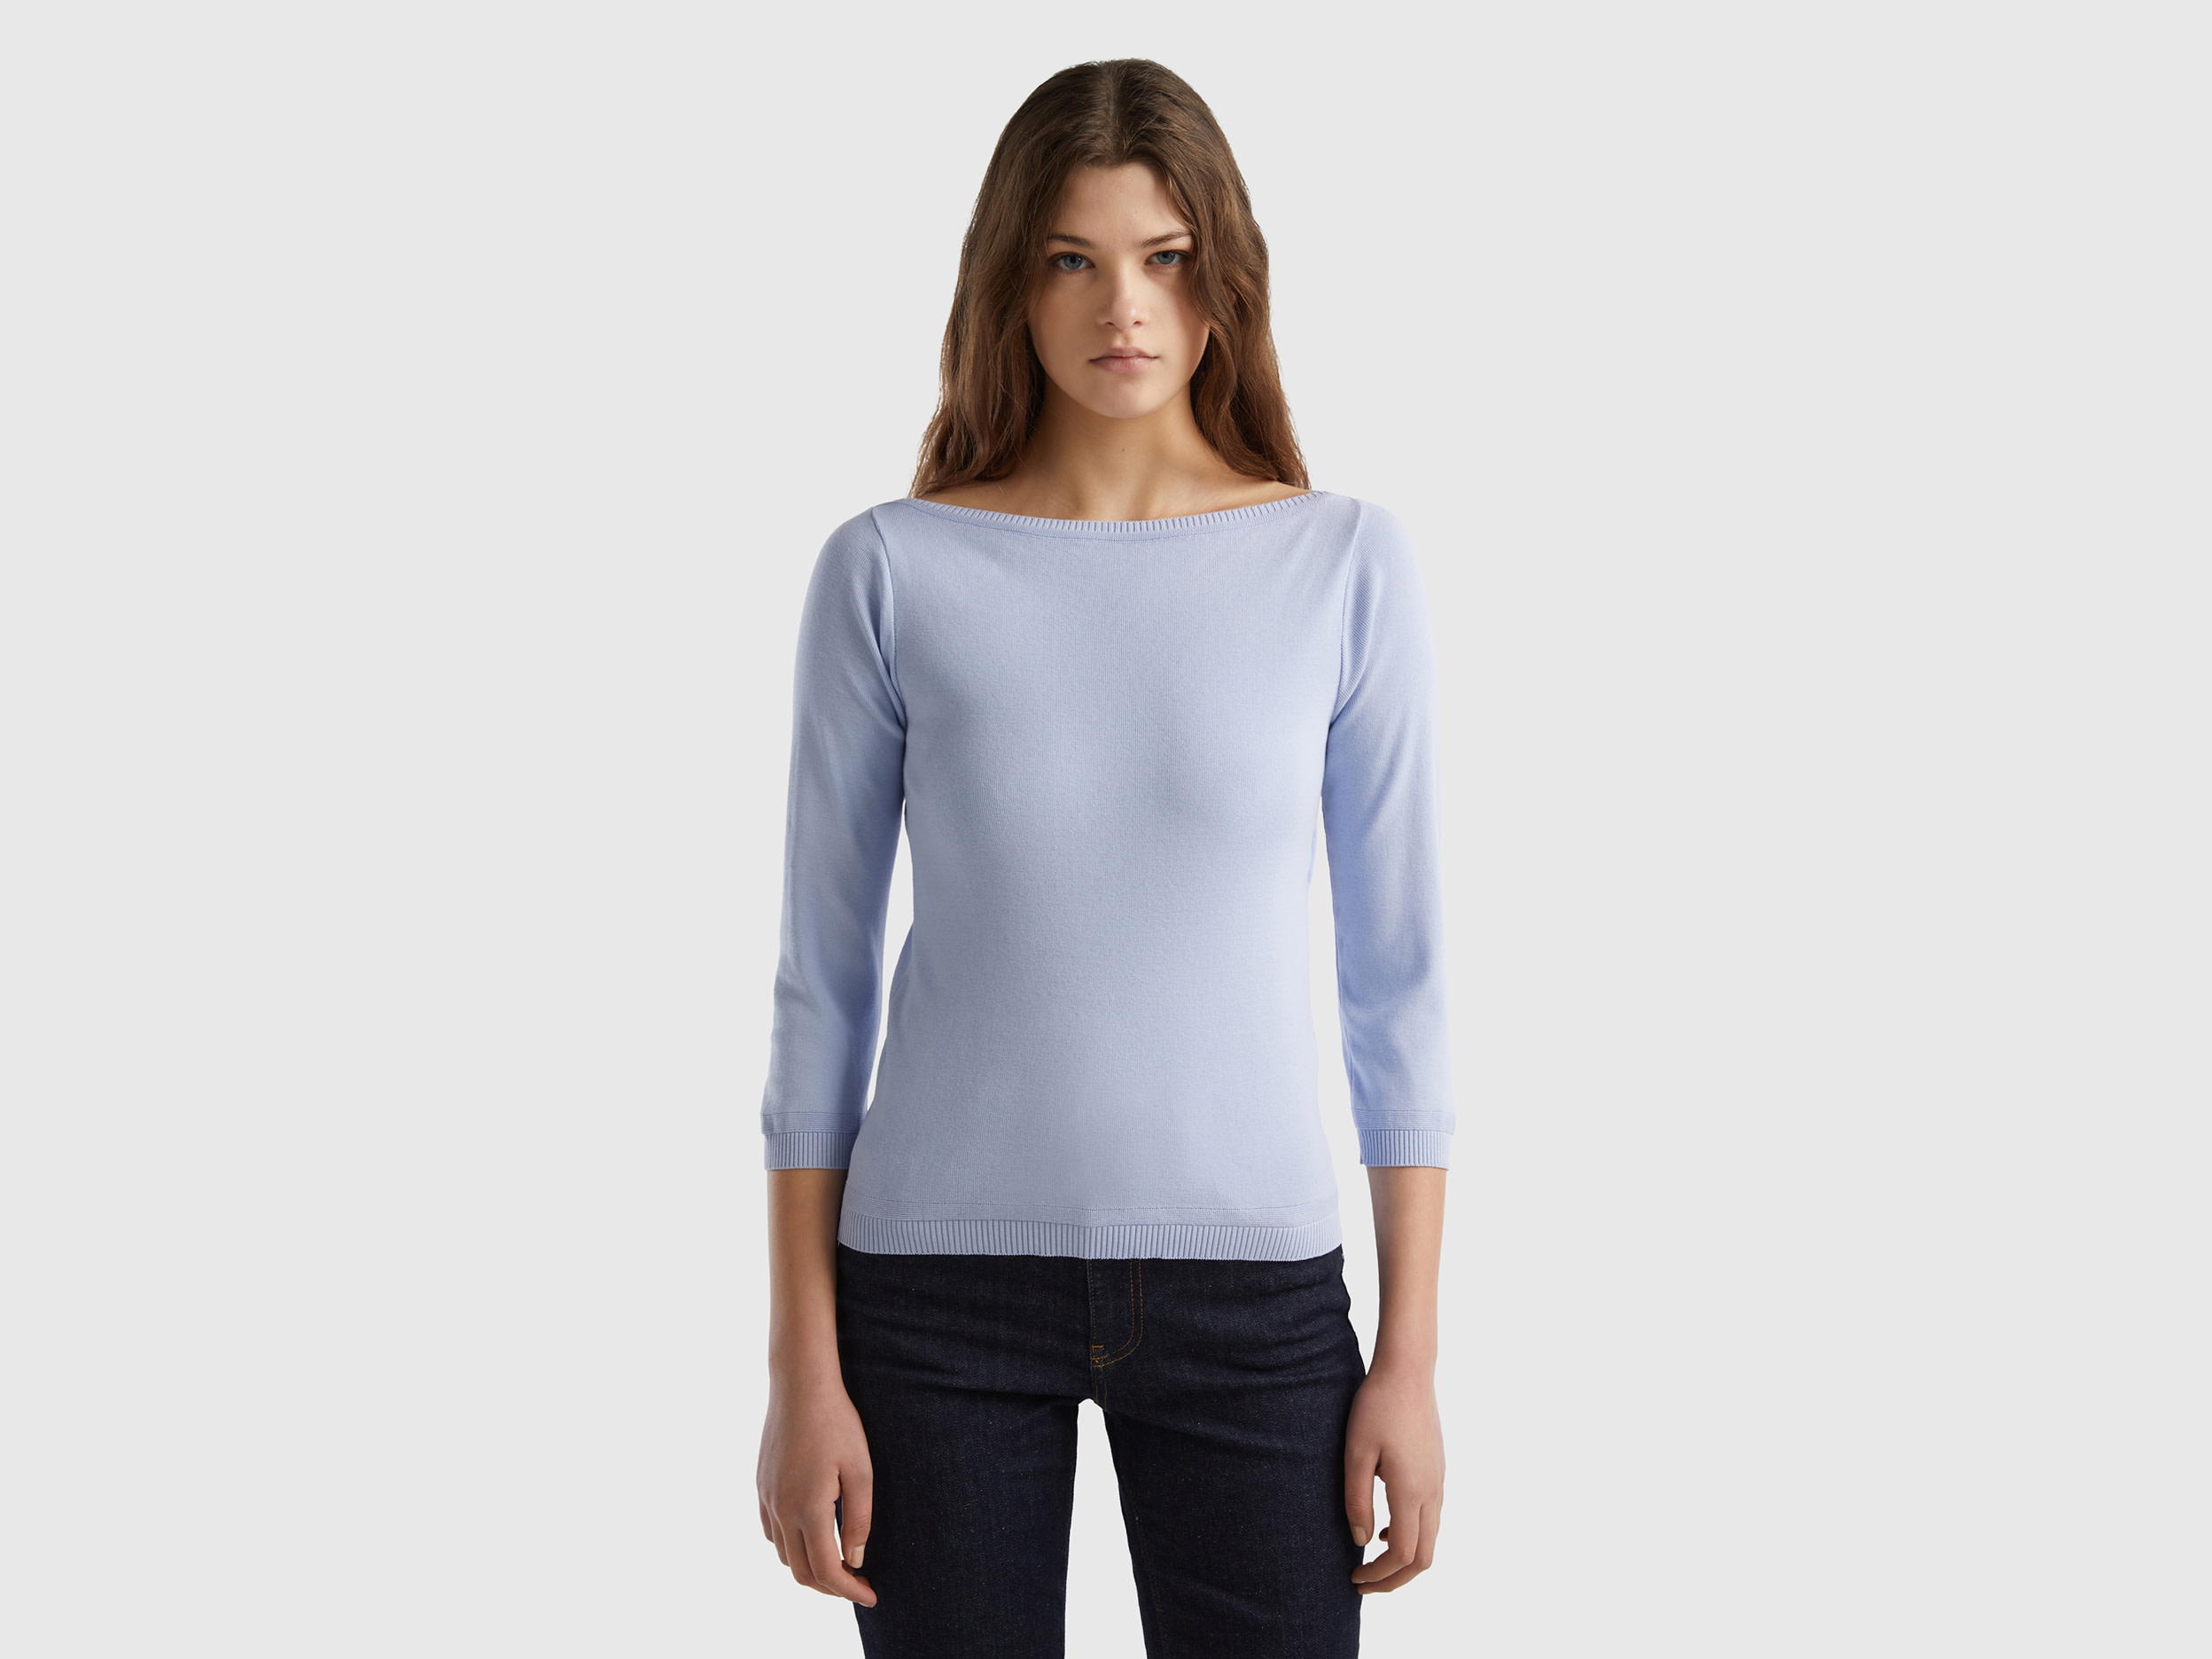 Benetton, 100% Cotton Boat Neck Sweater, size XS, Sky Blue, Women